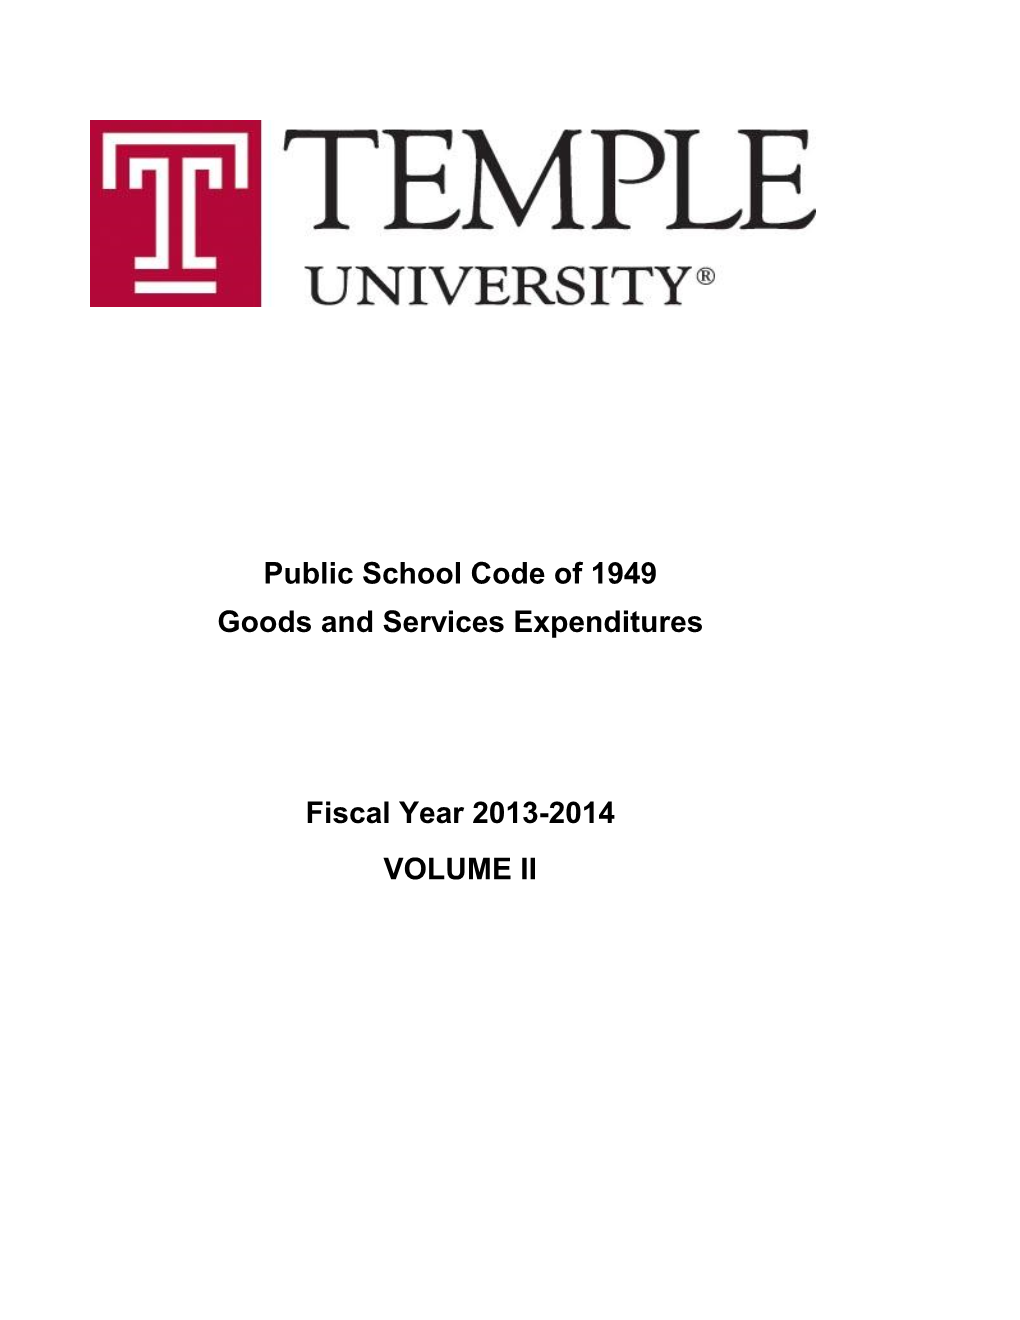 Temple University Snyder Report Volume II 2013-2014